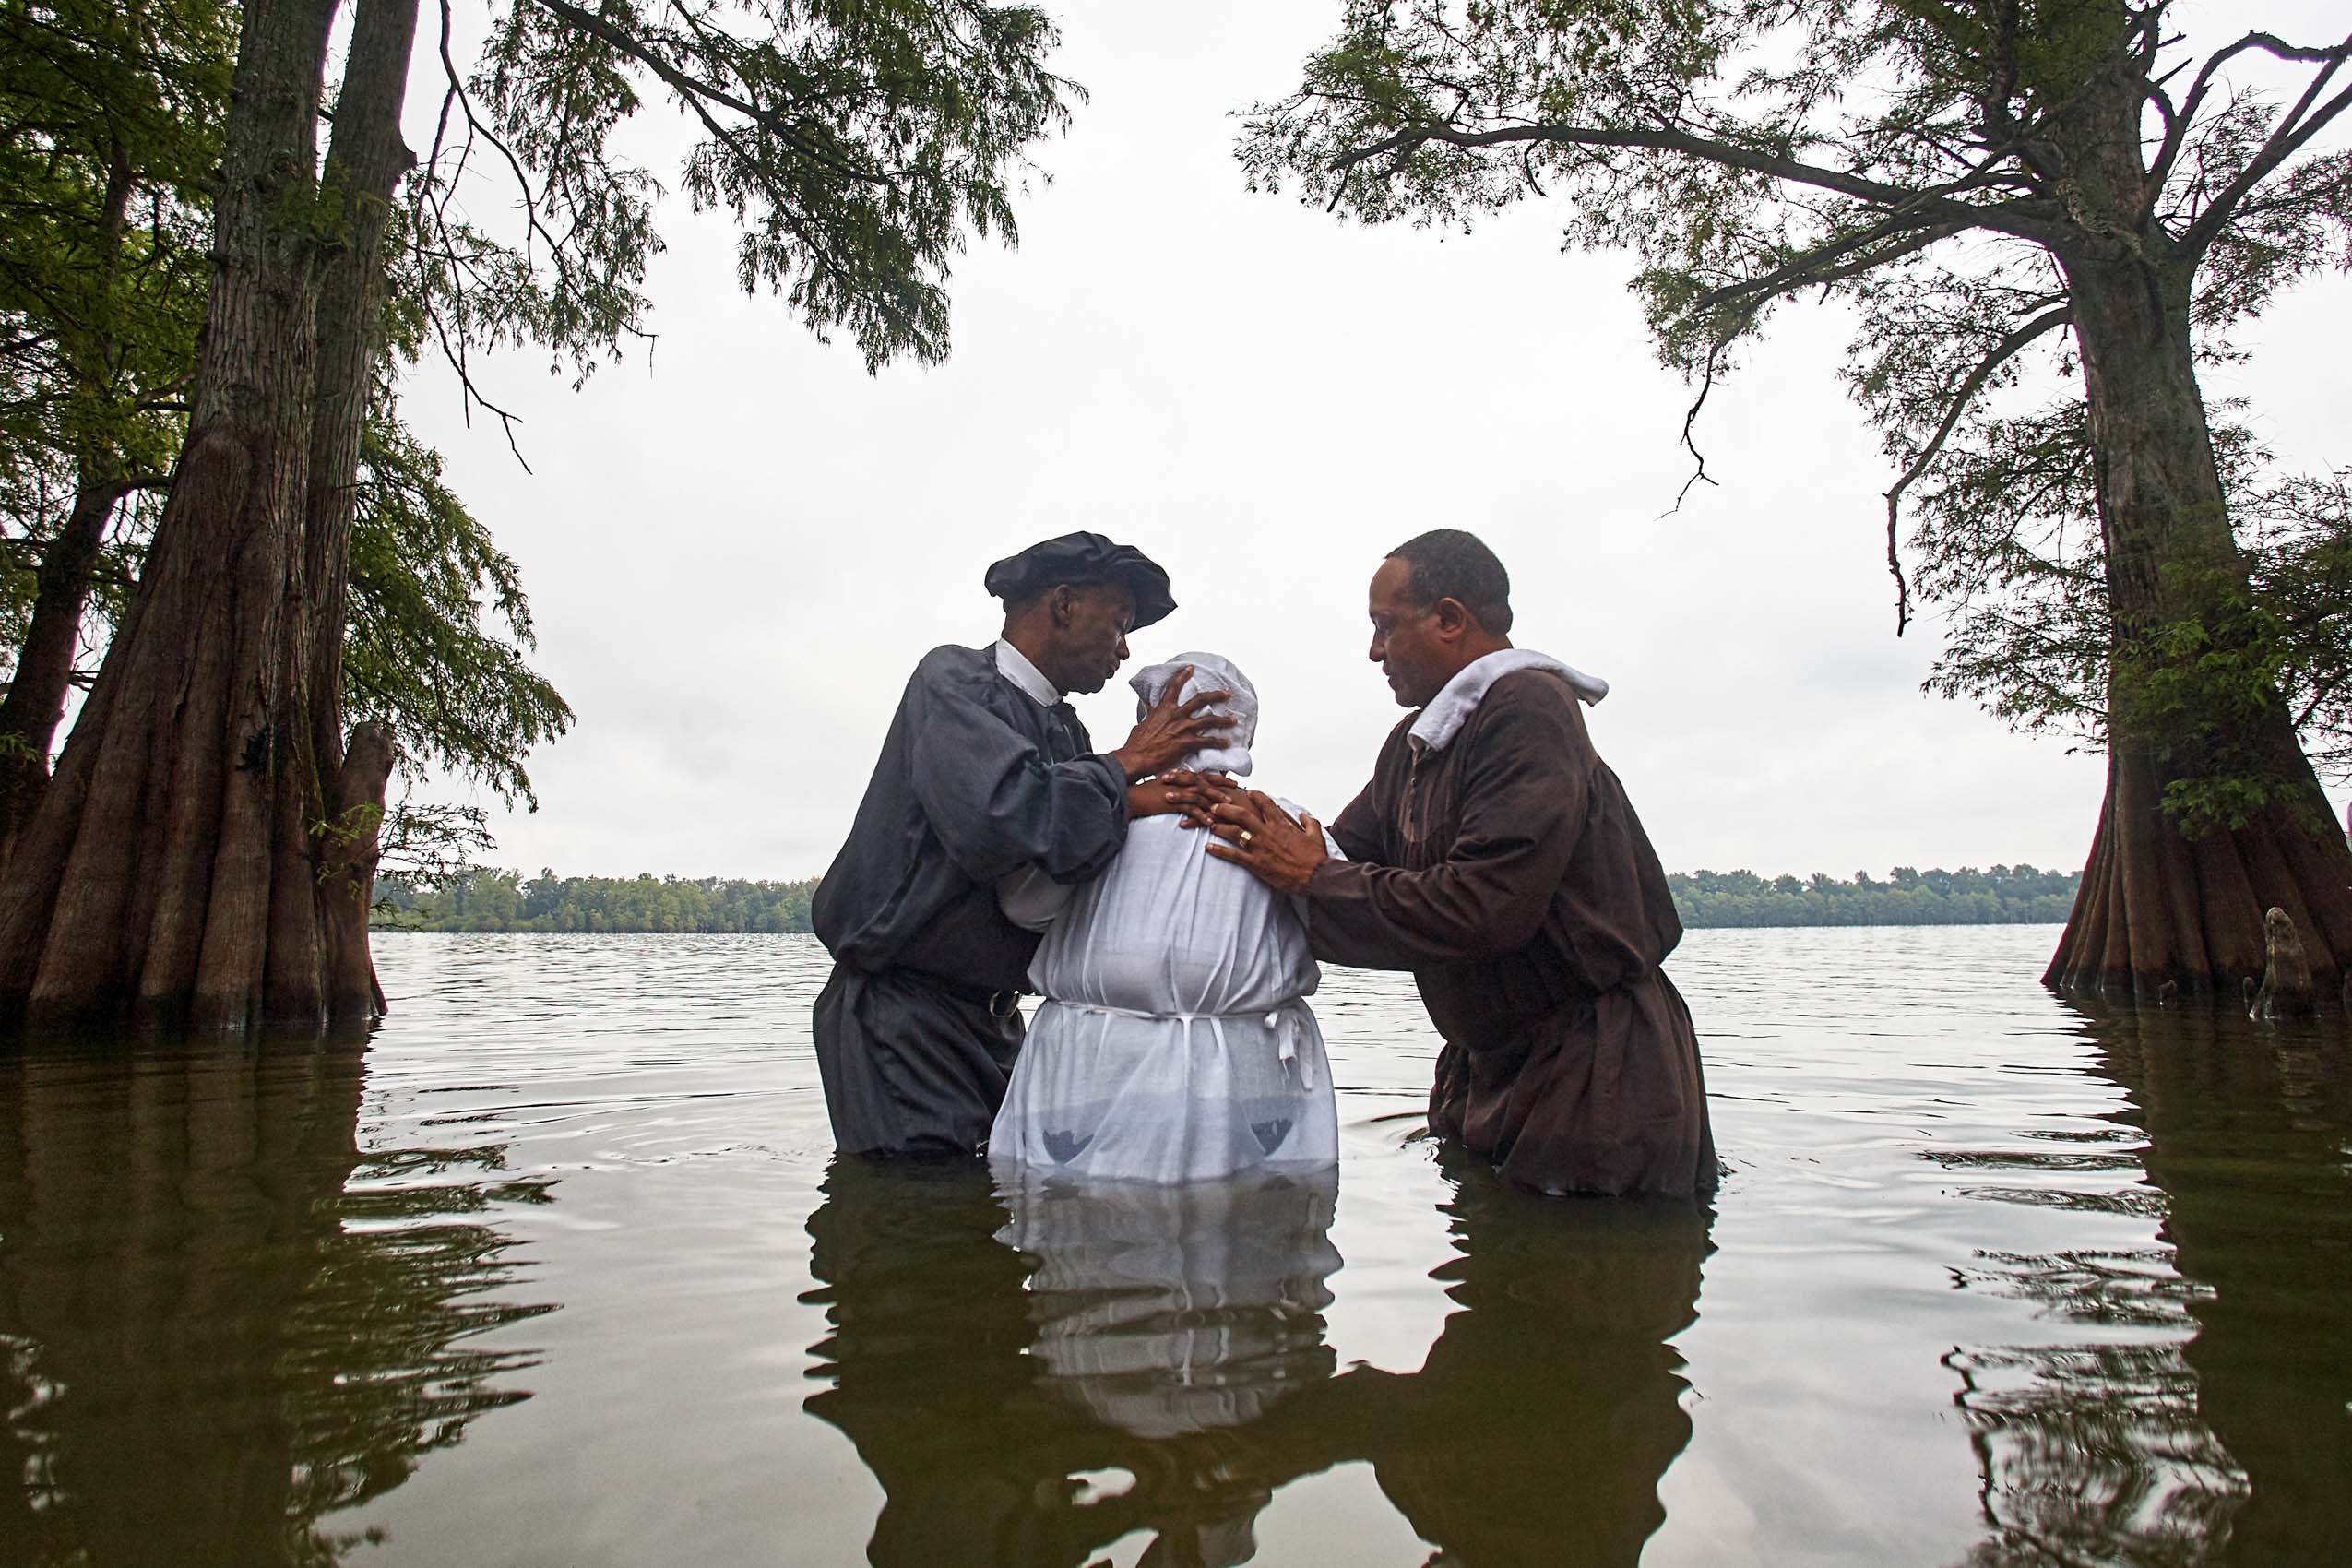 Preachers Perform Baptism in Mississippi